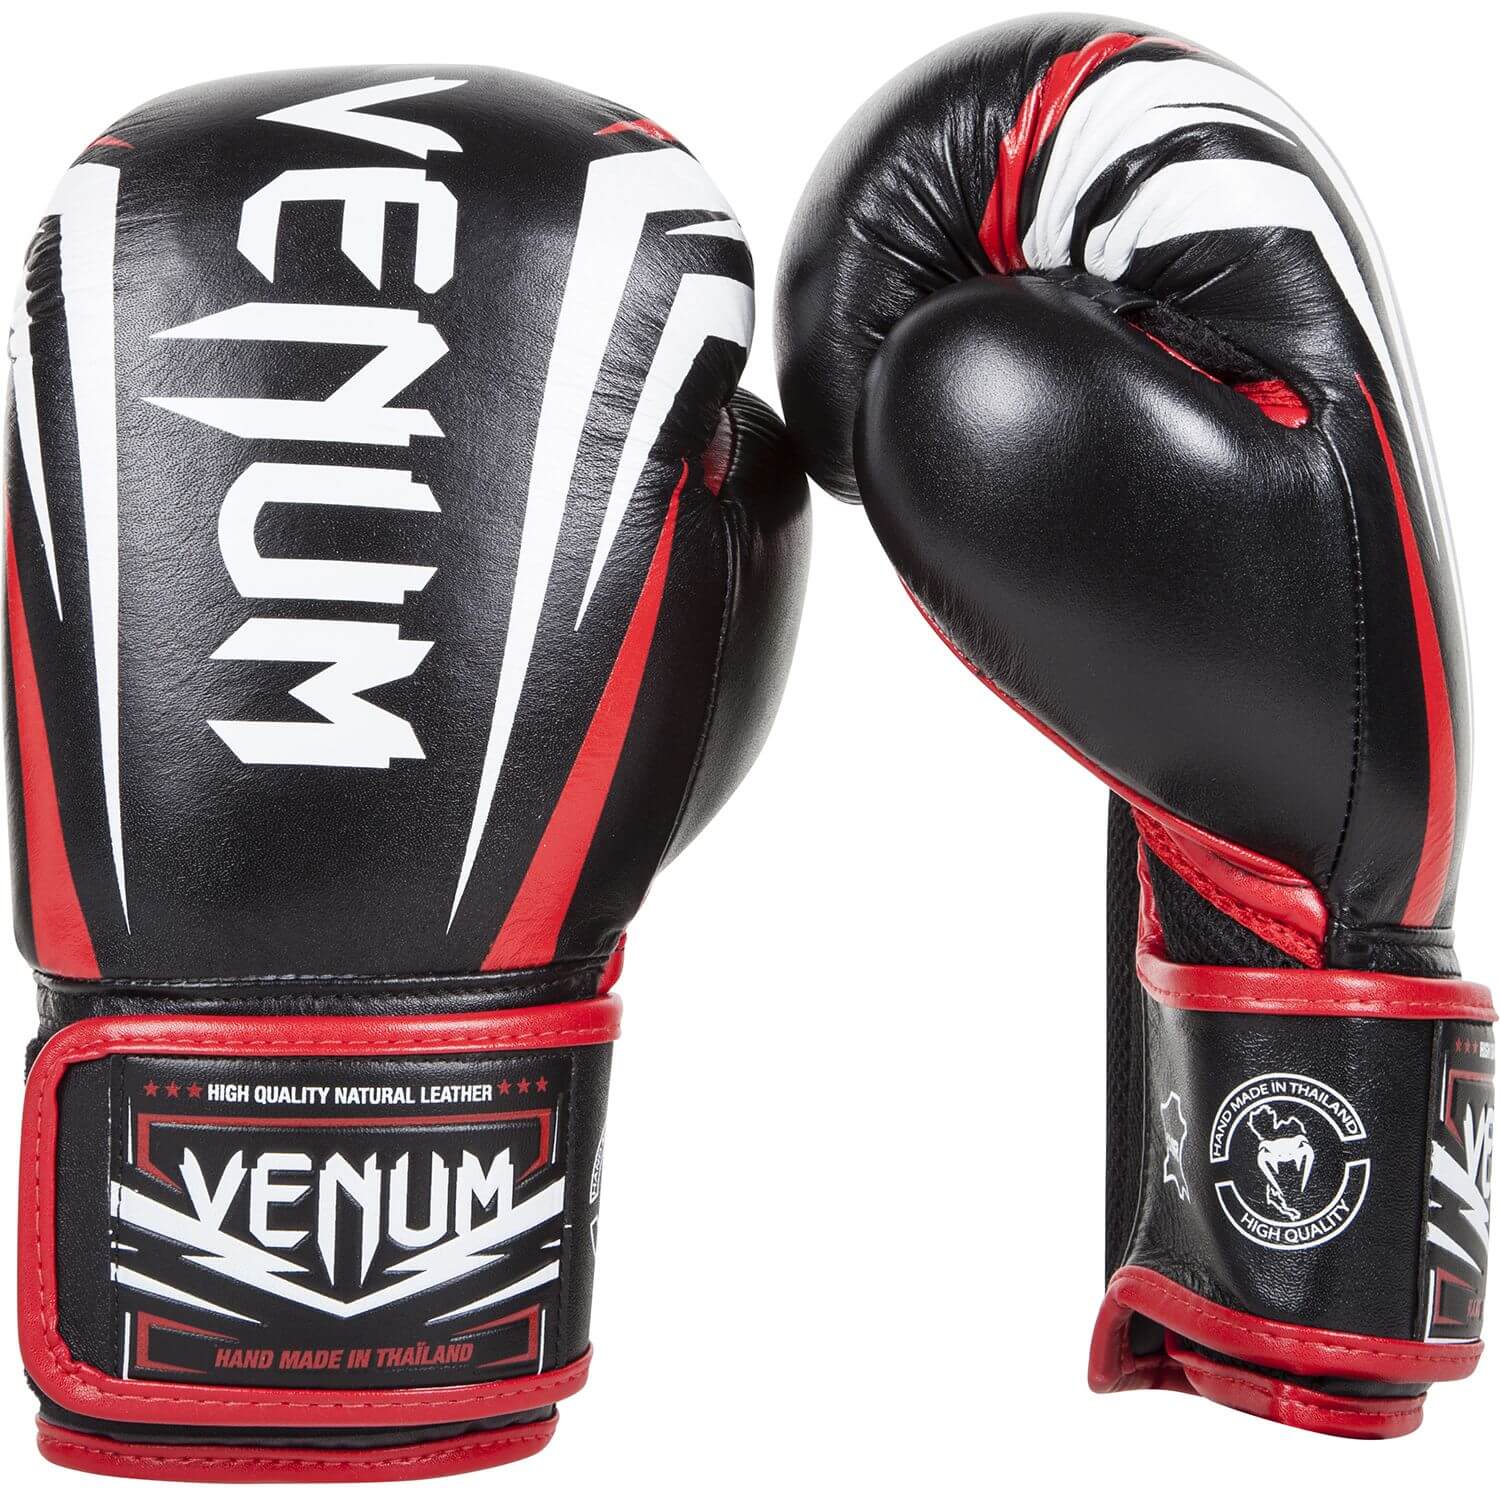 Venum Sharp Boxing Gloves - Best boxing training gloves